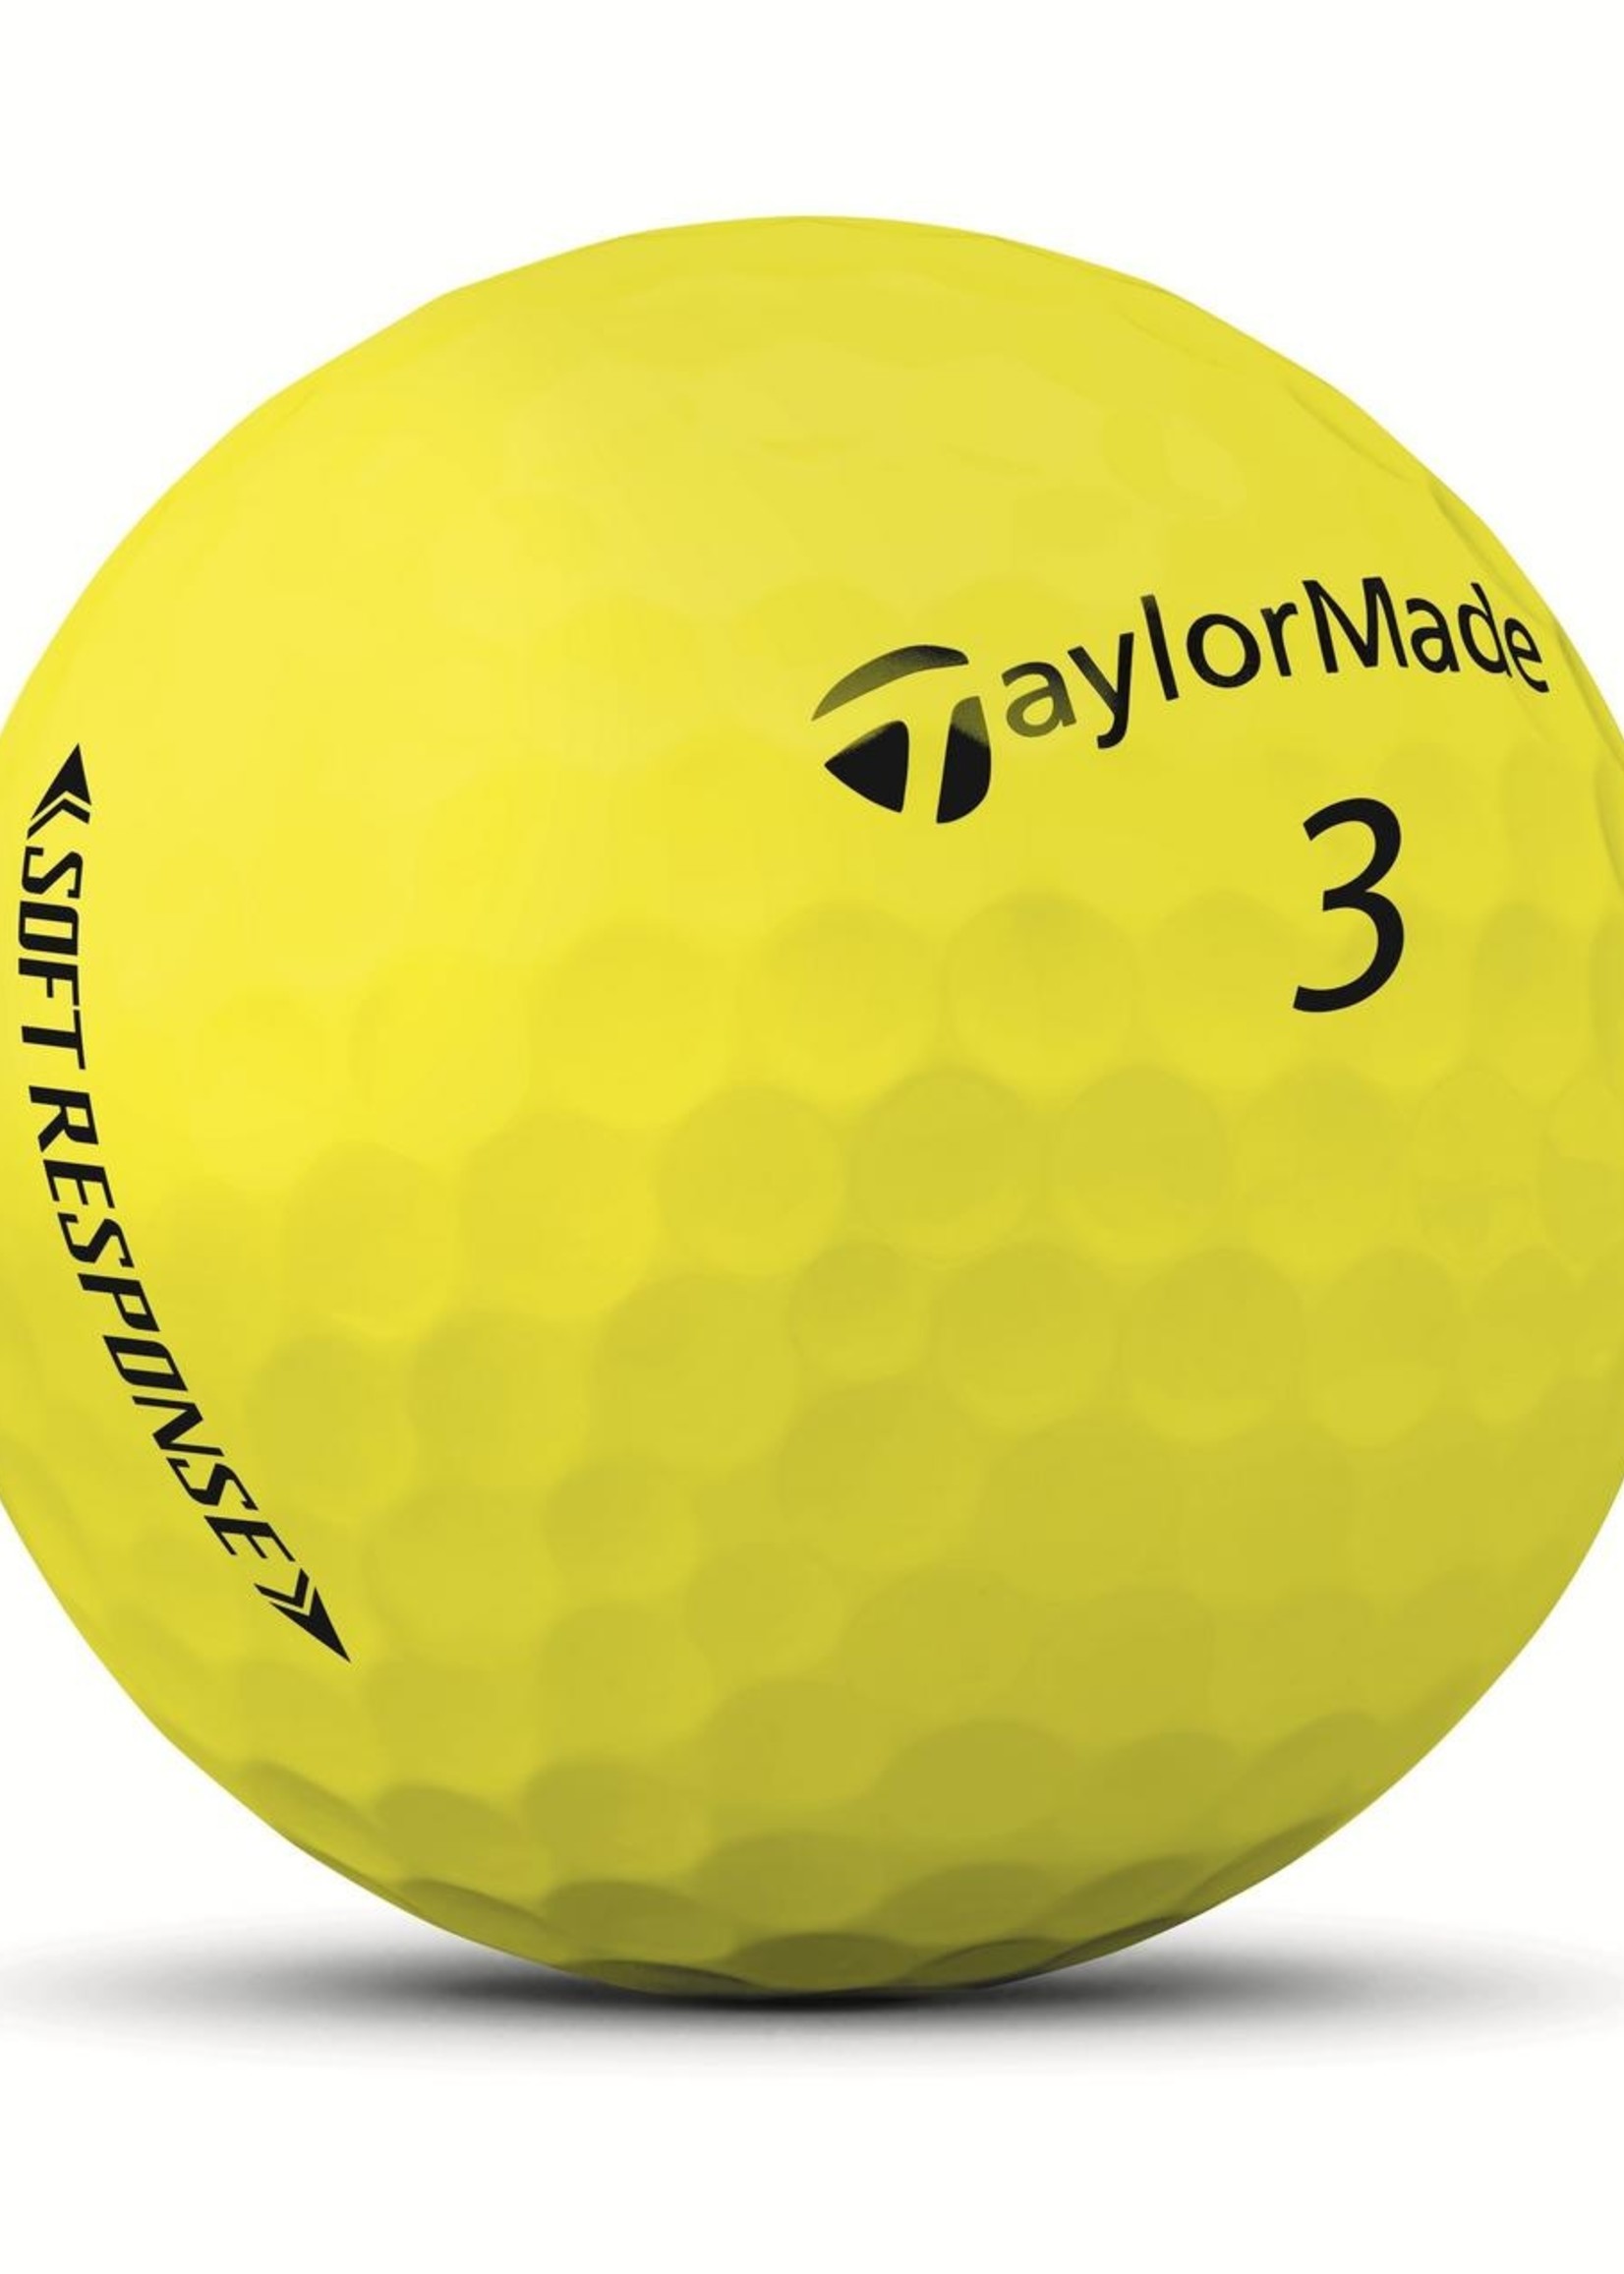 Taylormade TaylorMade Soft Response Golf Ball Dozen